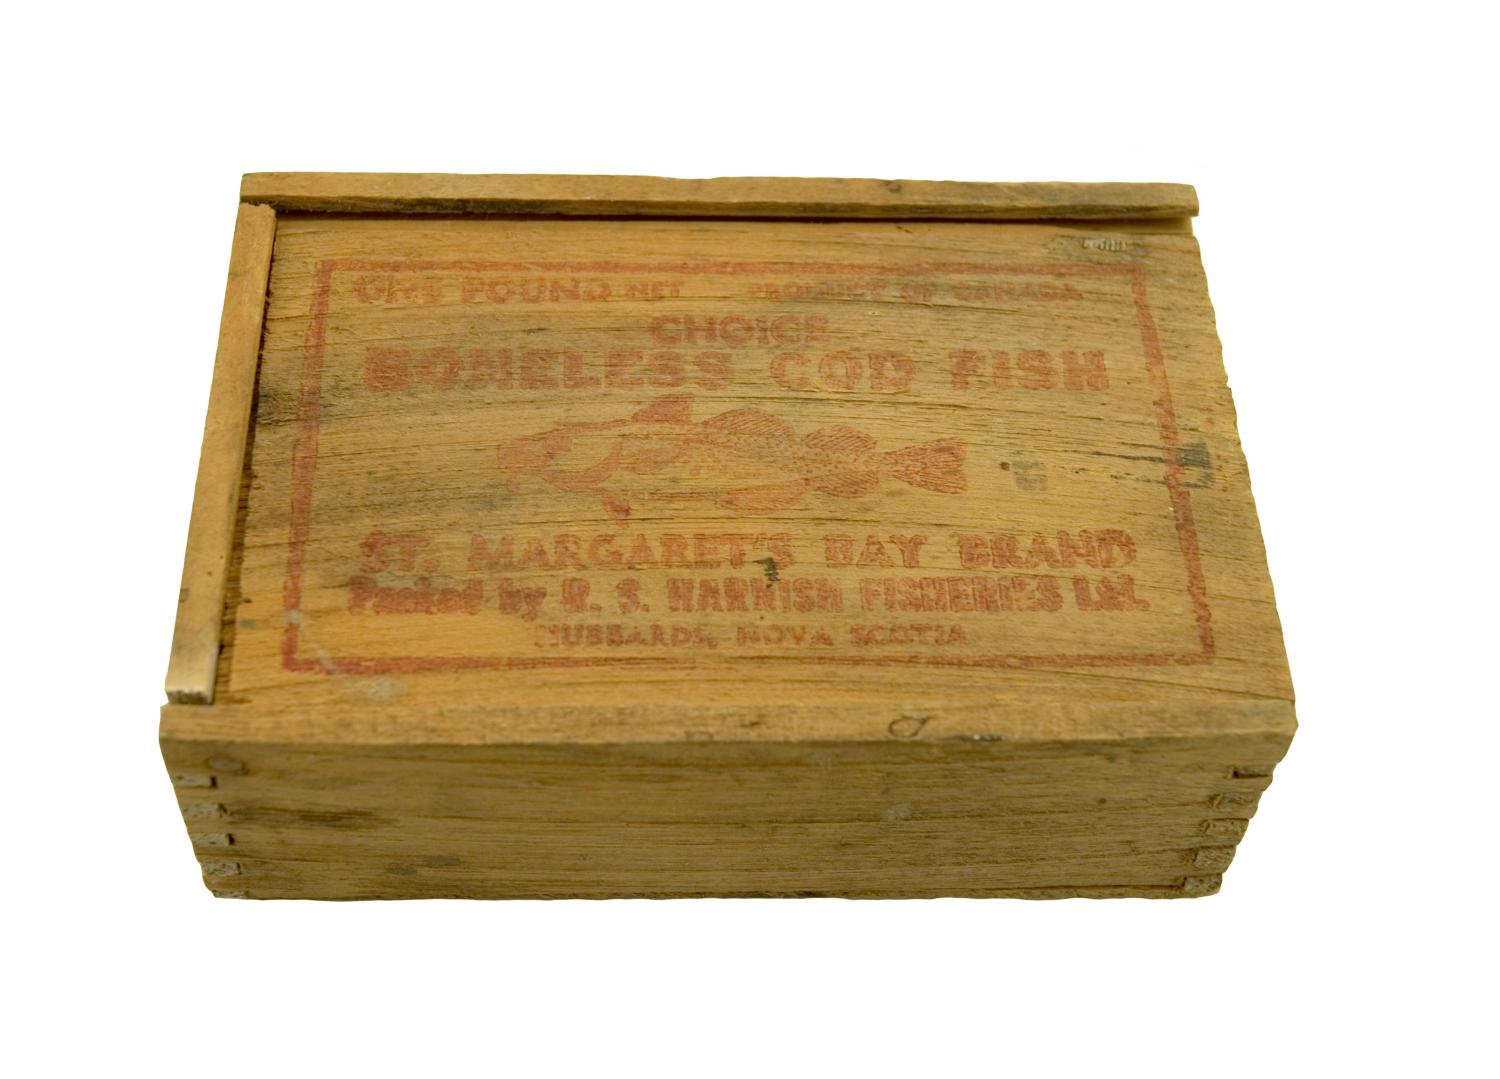 Wooden box - Choice Boneless Cod Fish - The Portal to Texas History